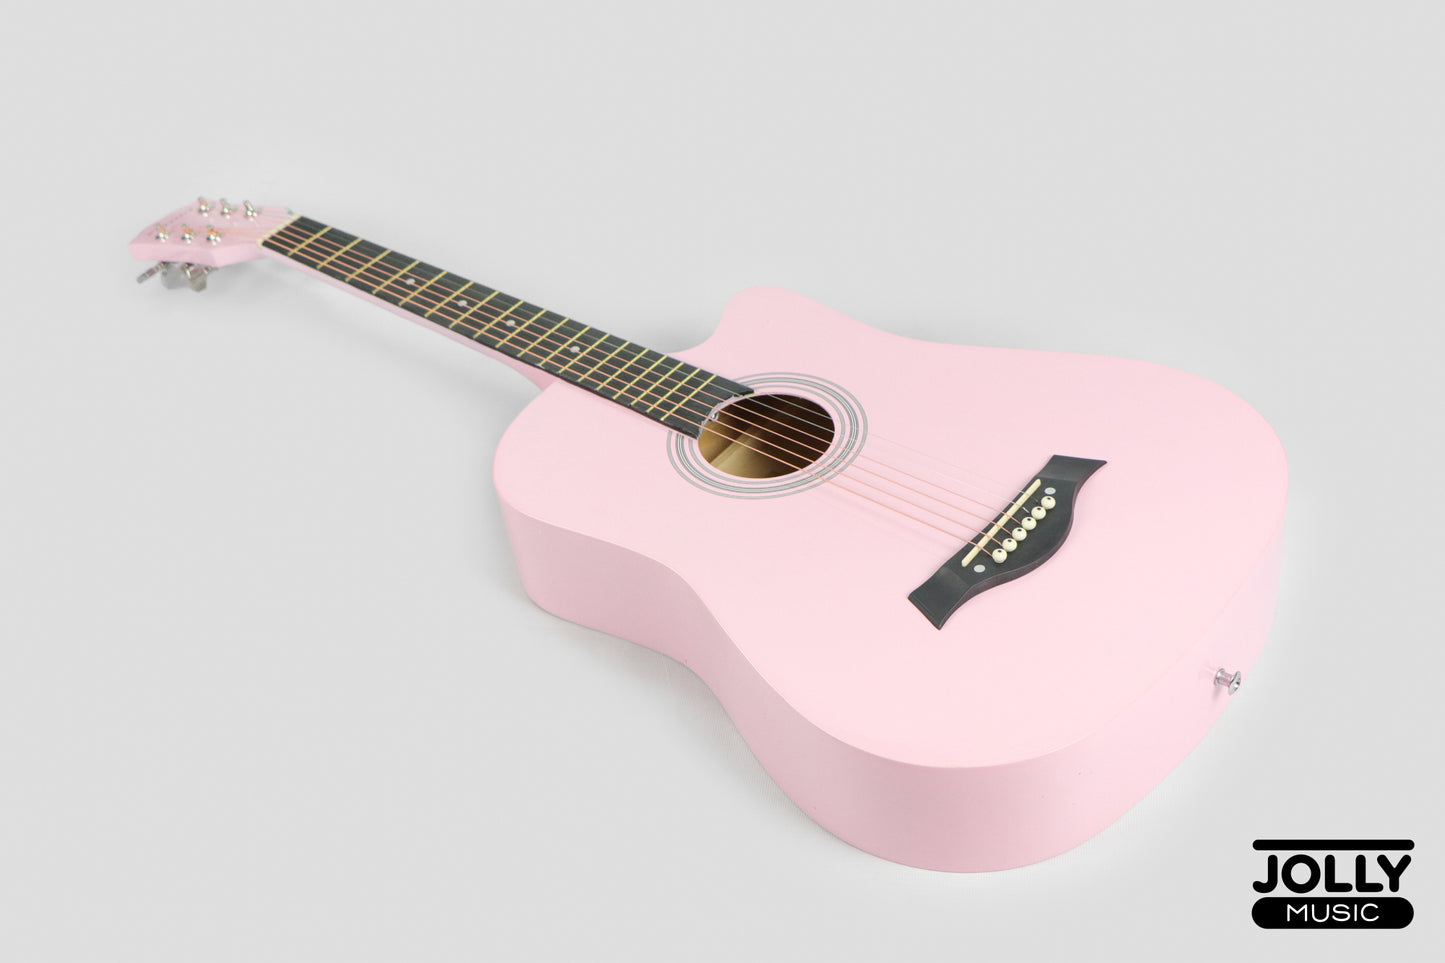 Baccero 38" Guitar K-38LT Truss Rod w/ Case, 3 Picks, Tuner, Capo - Pink